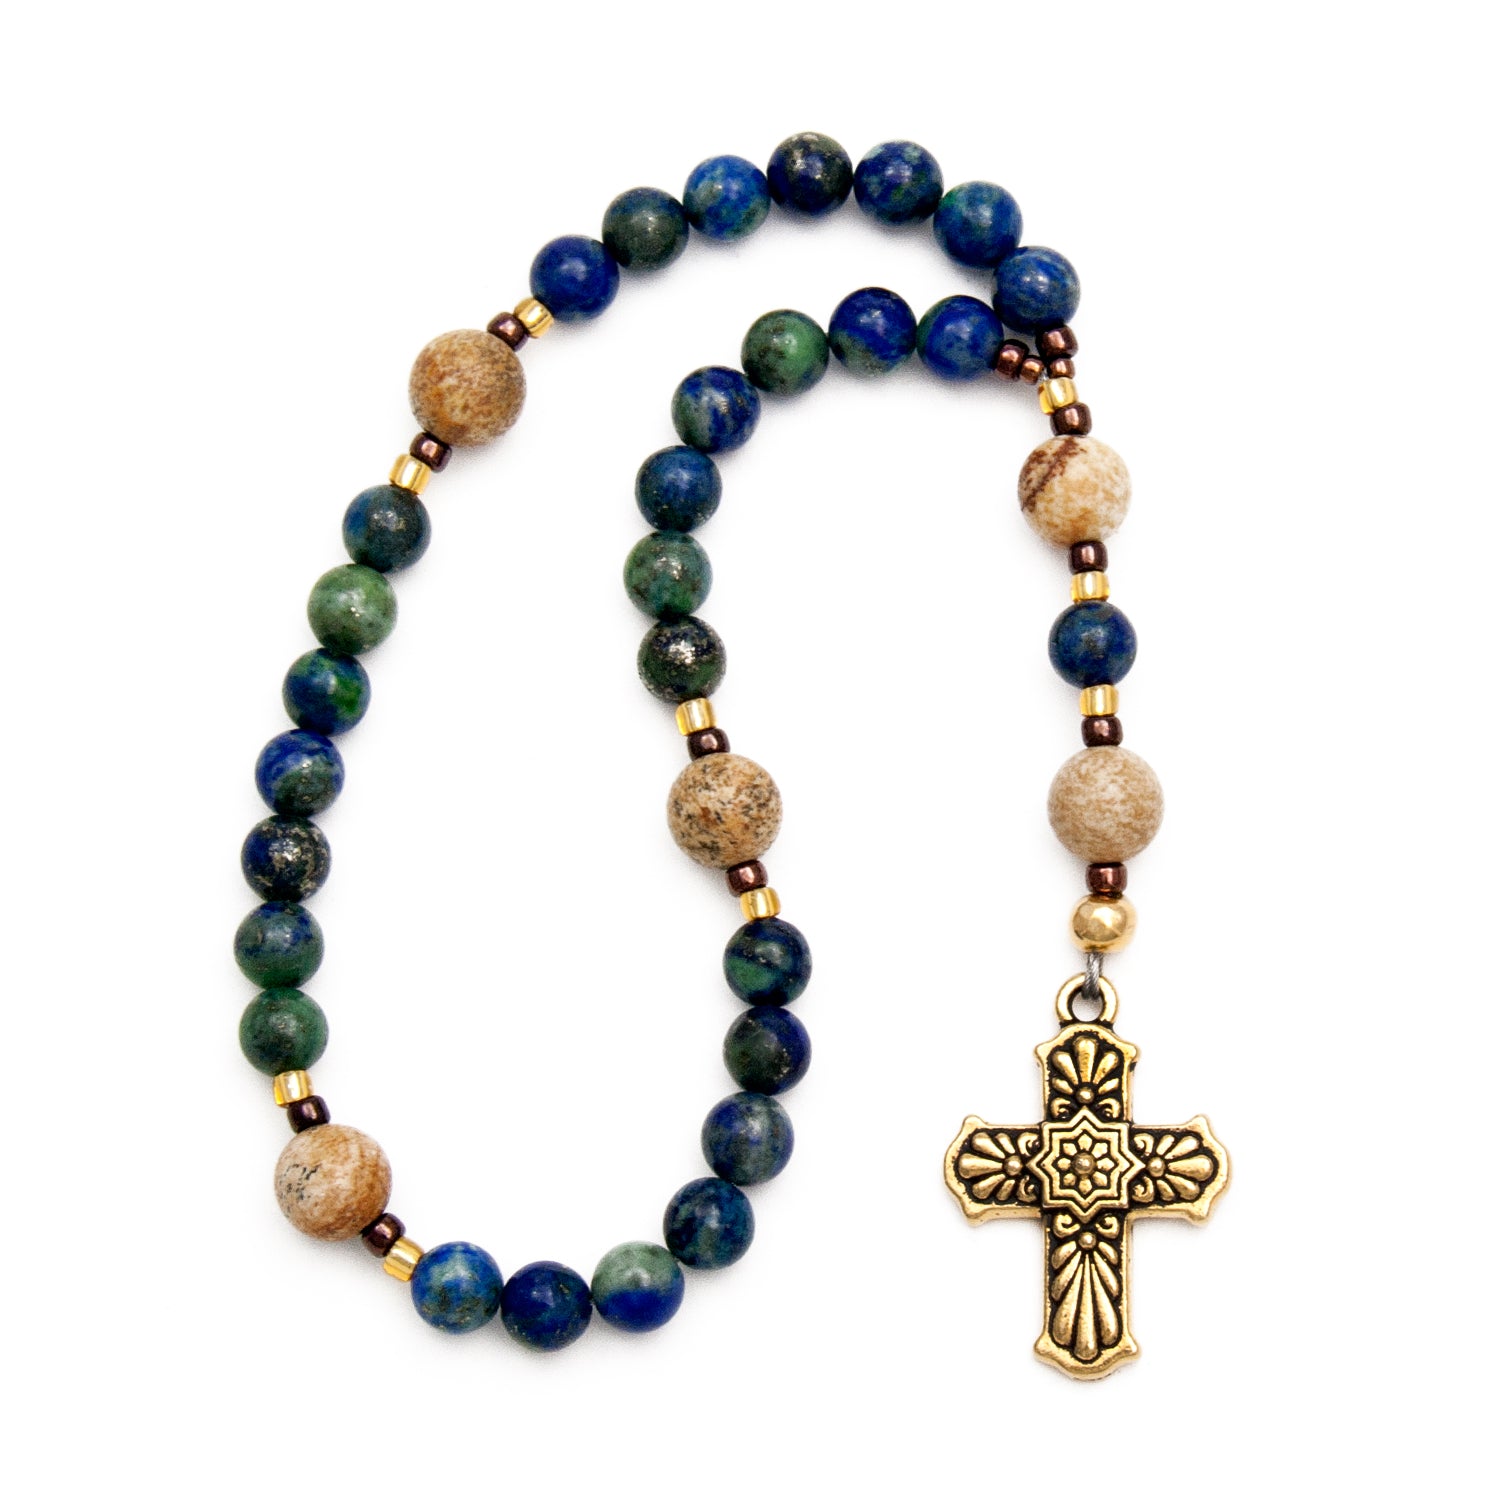 HANDMADE Anglican Rosary BLUE PINK Coated Glass PRAYER BEADS | eBay